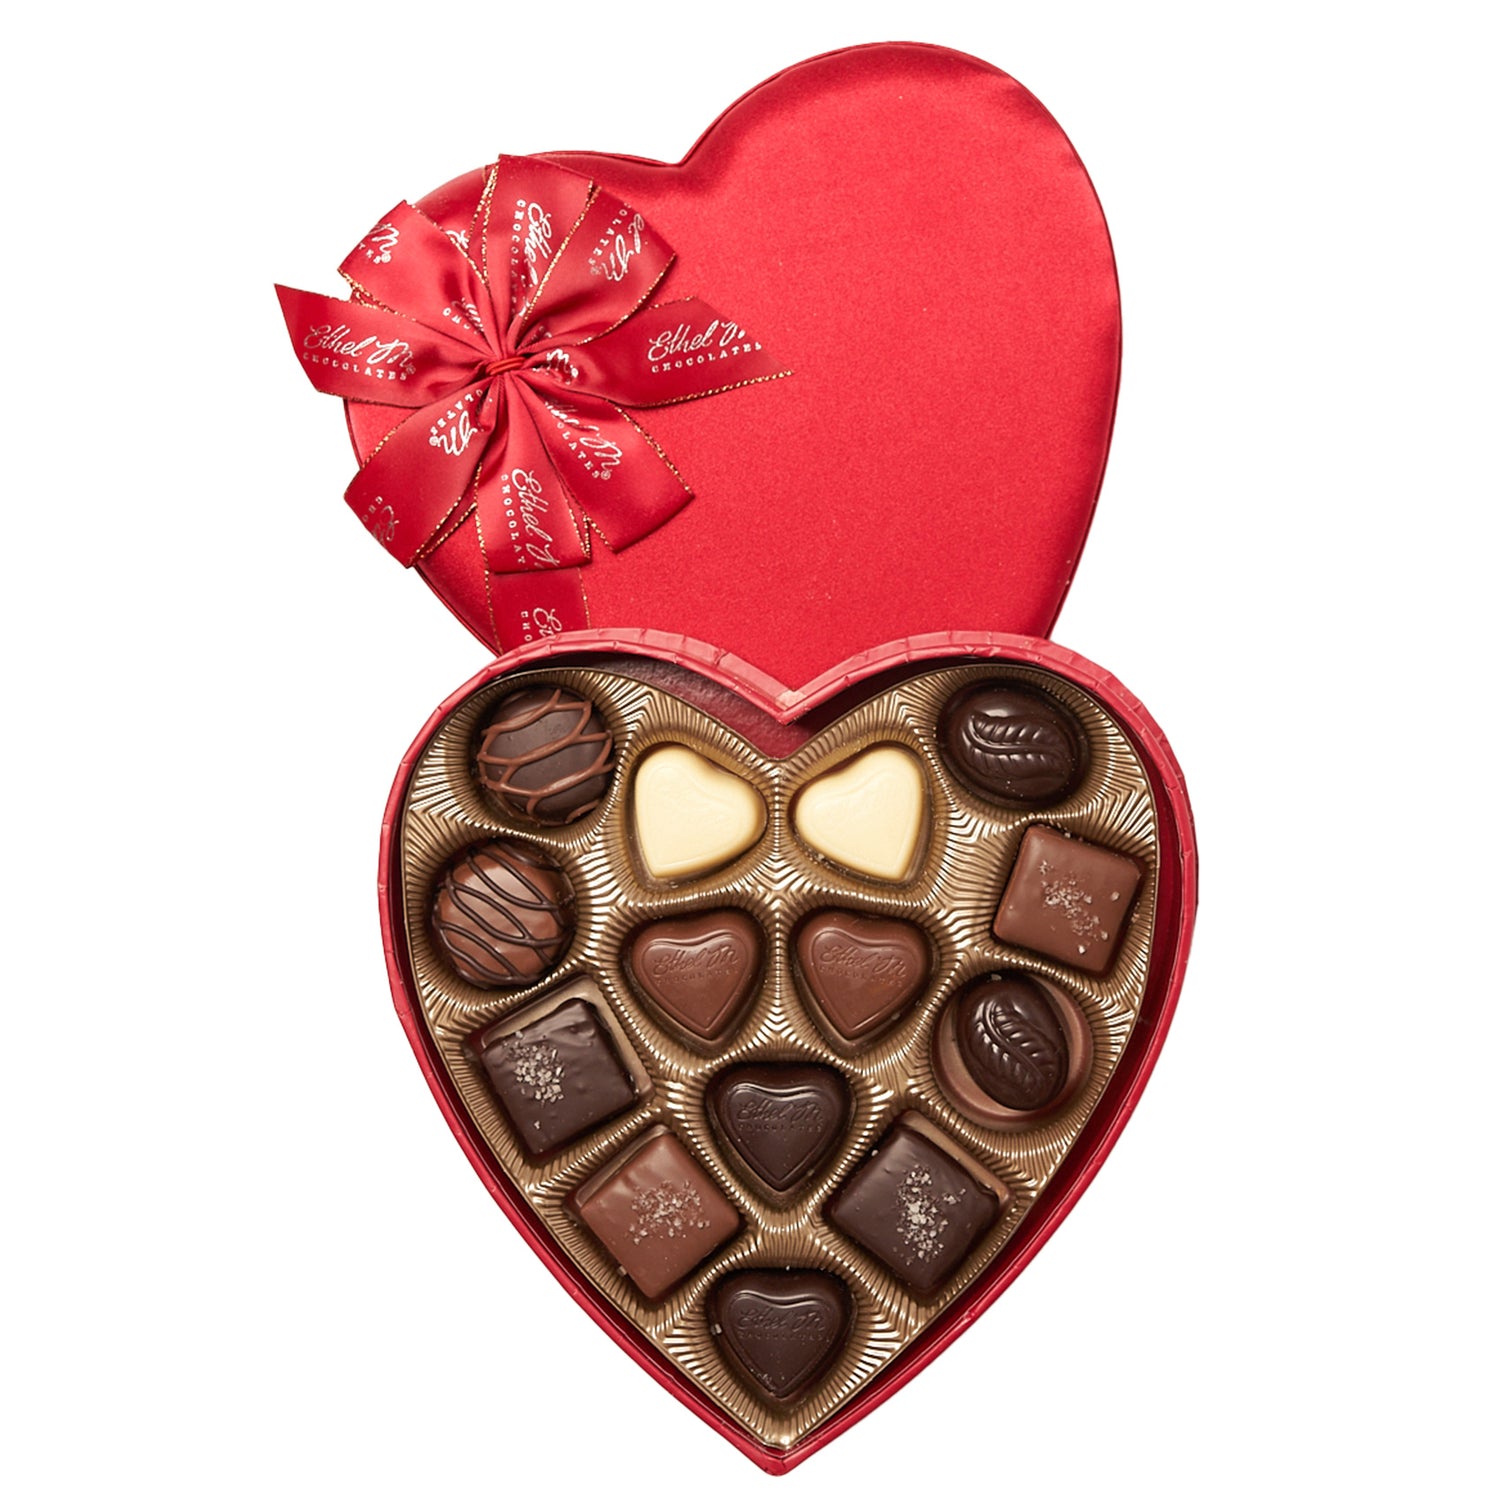 Ethel M Valentine's Day Small Heart 14-piece Chocolate Gift Box - Hero Image